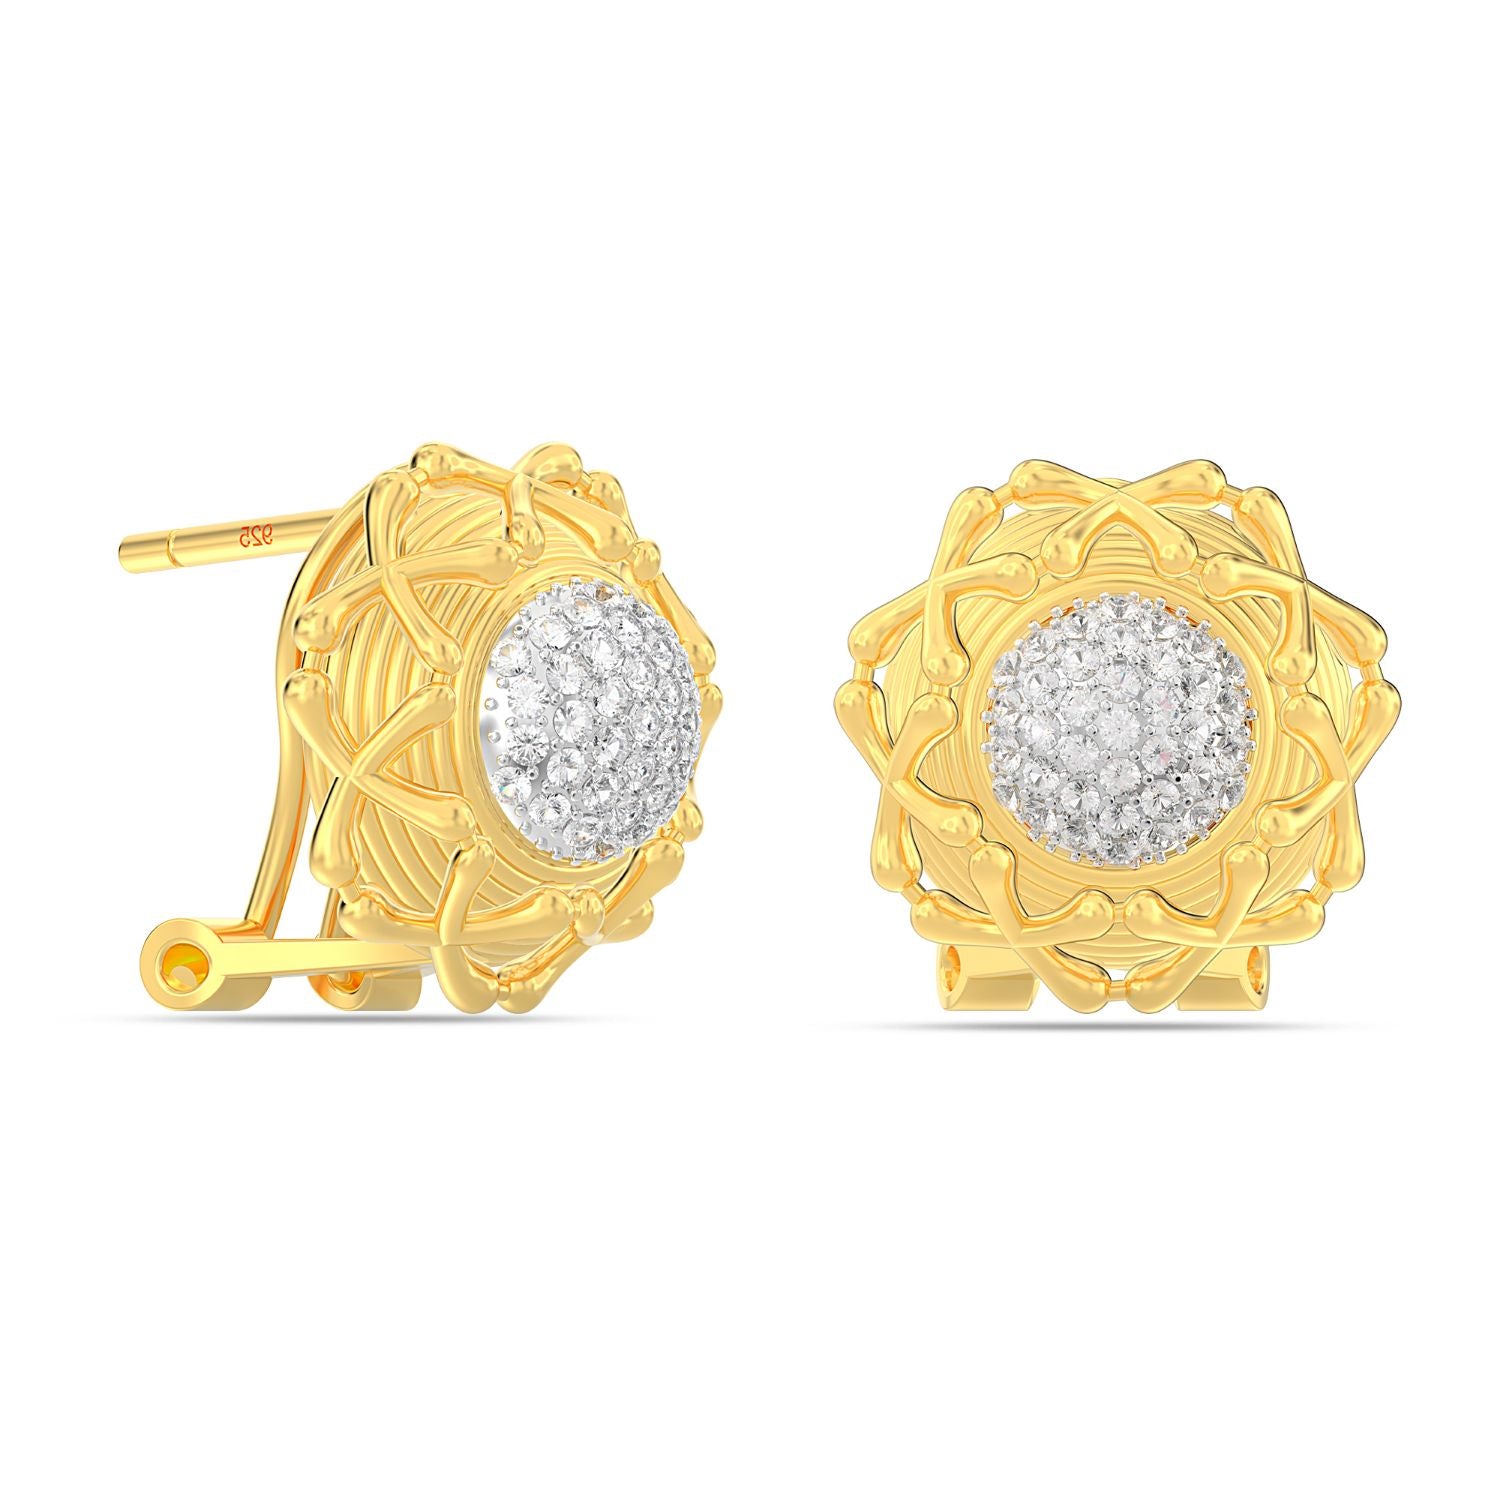 925 Sterling Silver 14K Gold Plated Two Tone Stud Earrings for Women Teen